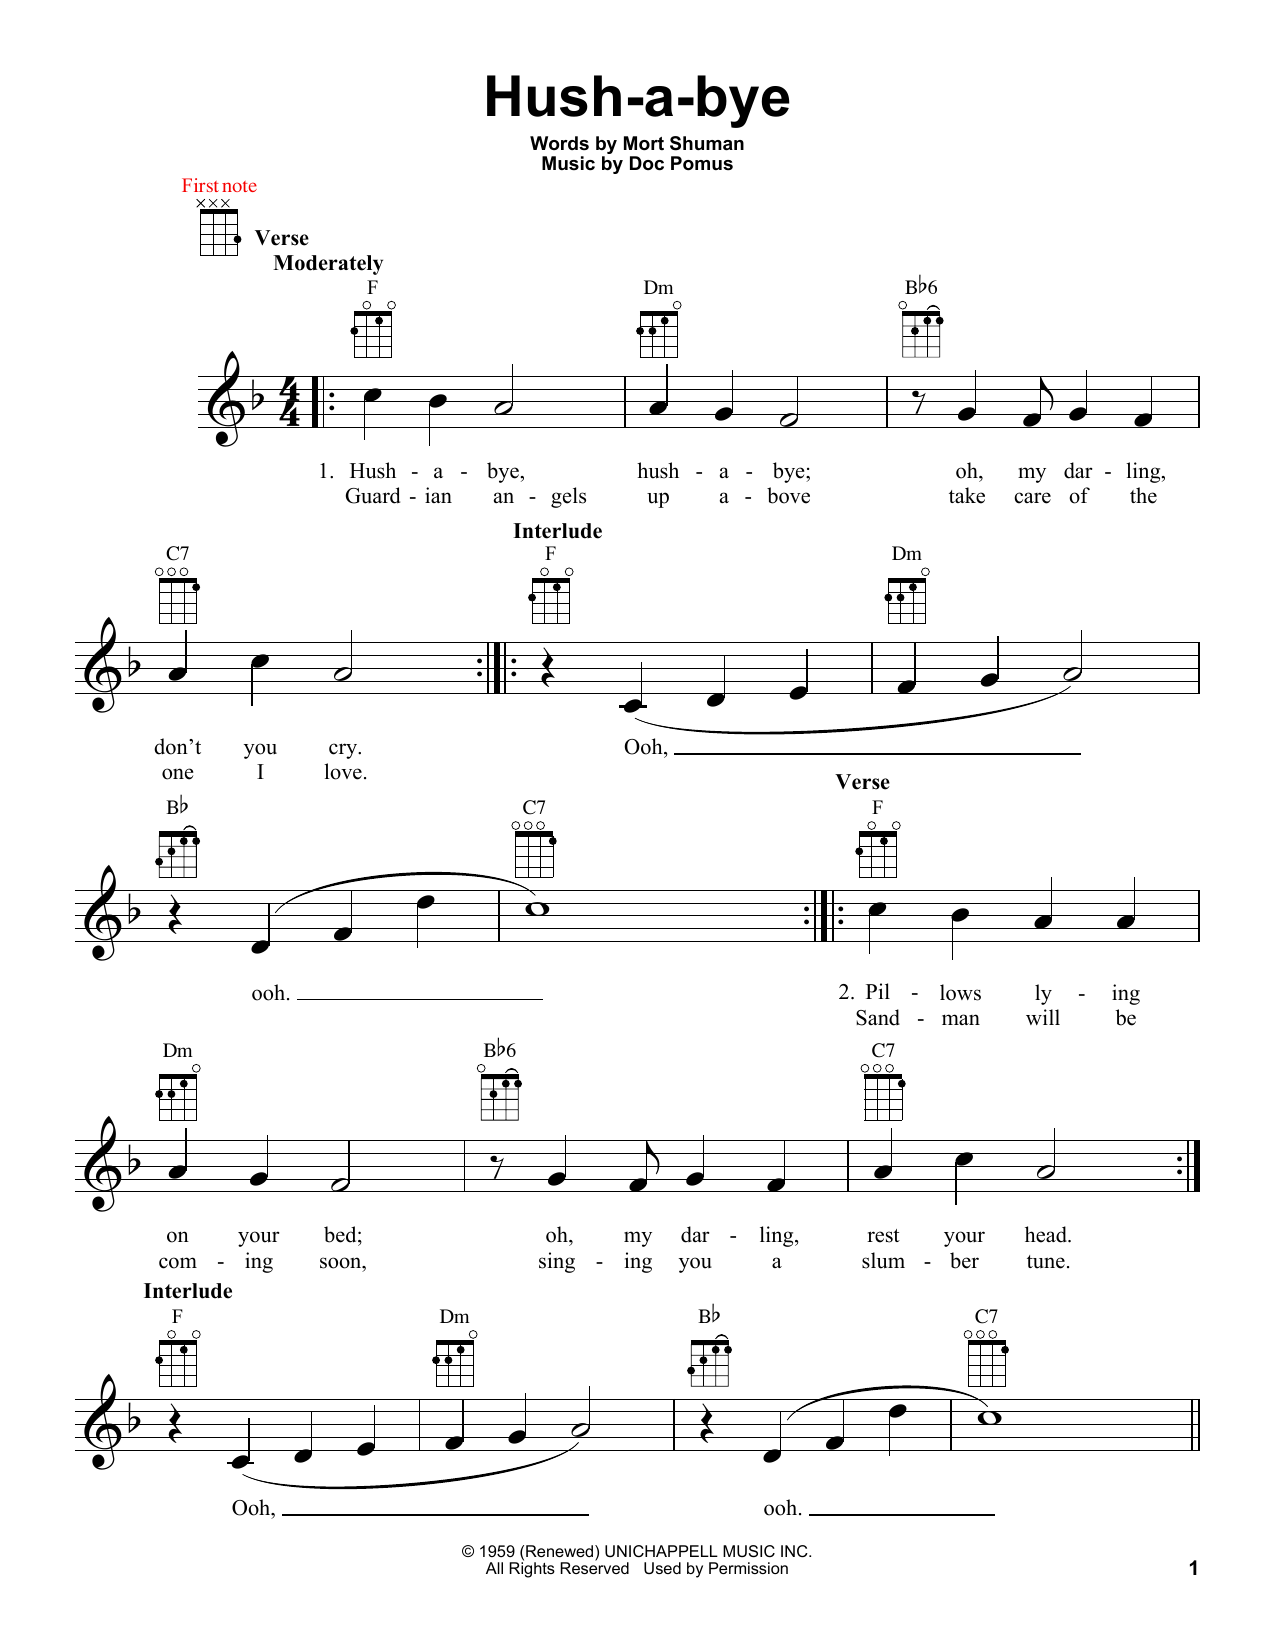 Mystics Hush-a-bye Sheet Music Notes & Chords for Chord Buddy - Download or Print PDF